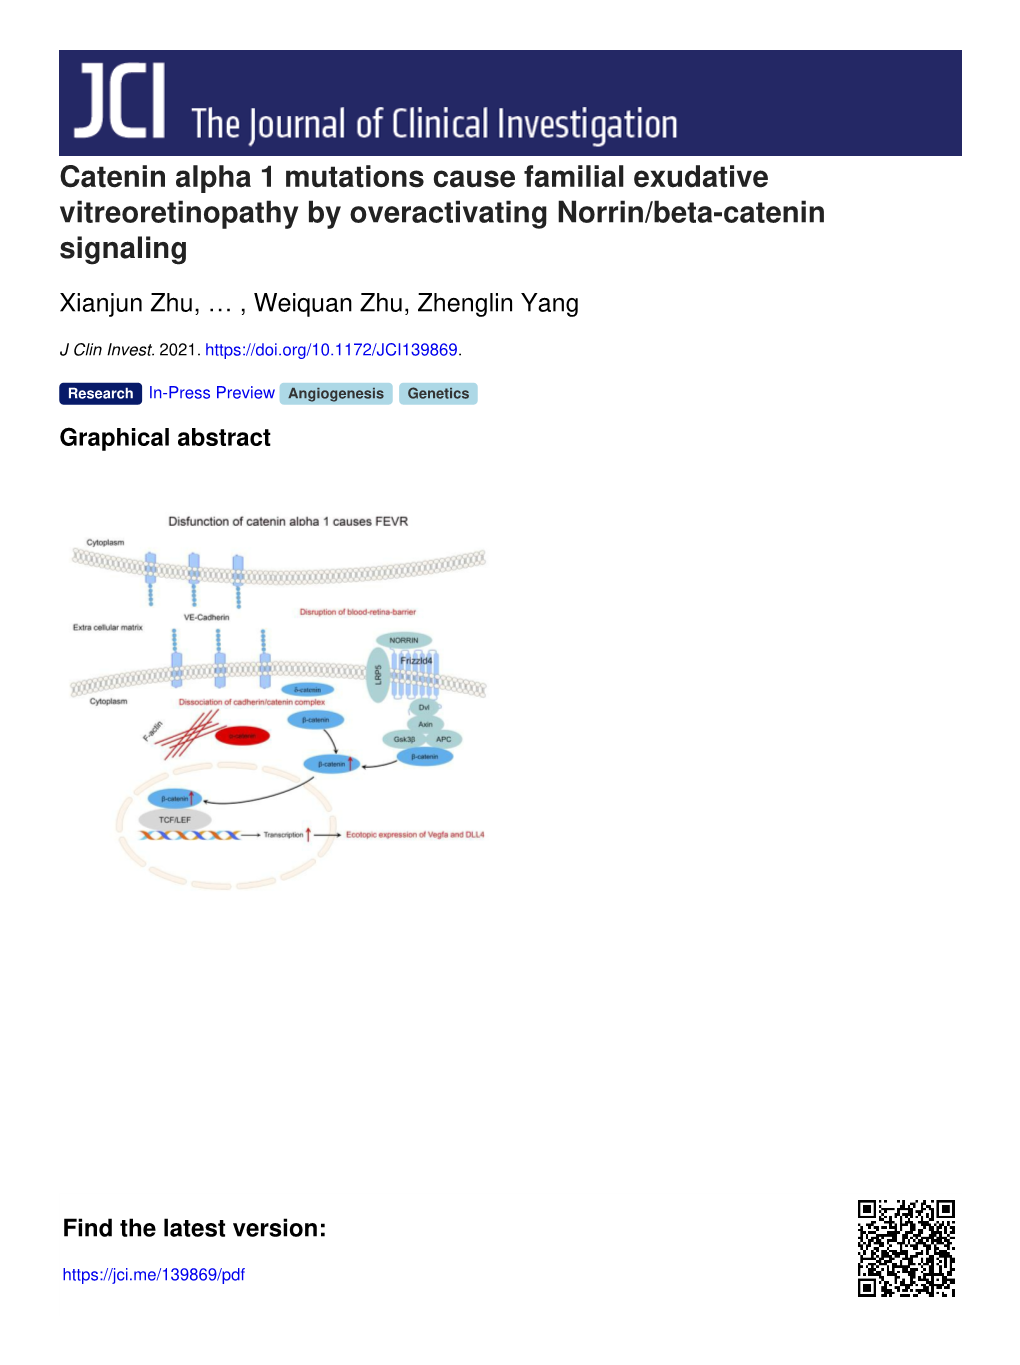 Catenin Alpha 1 Mutations Cause Familial Exudative Vitreoretinopathy by Overactivating Norrin/Beta-Catenin Signaling